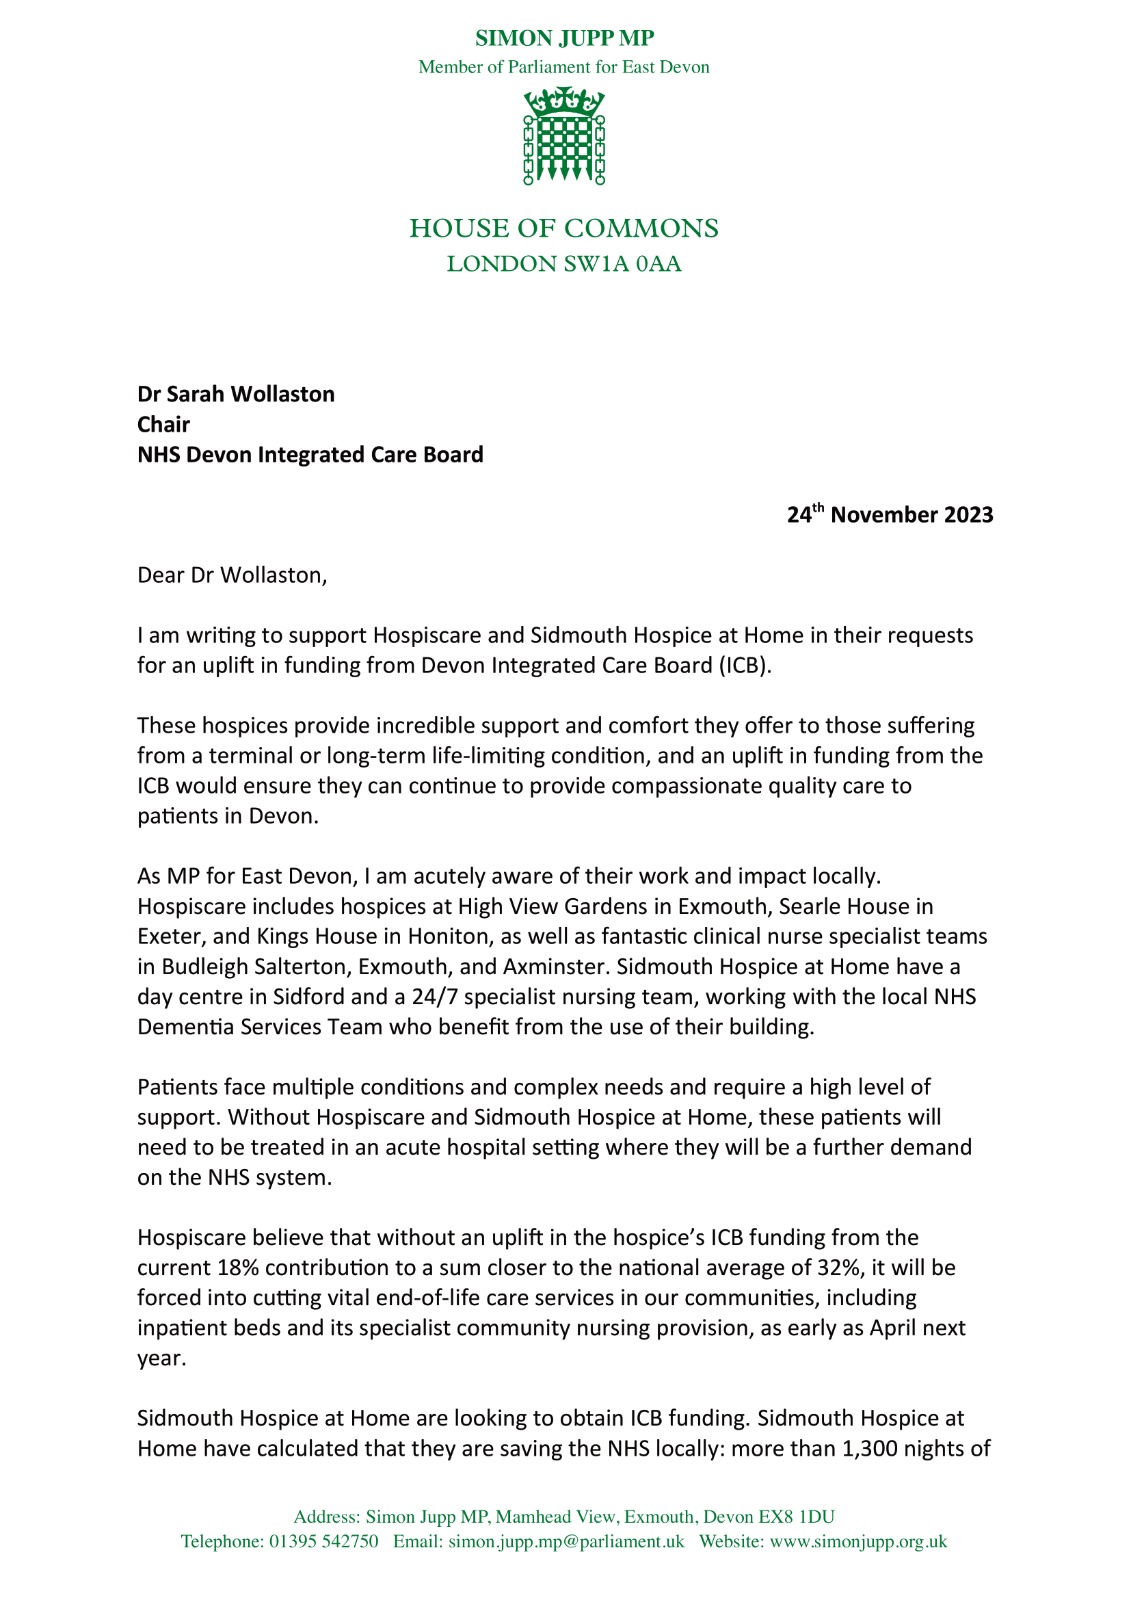 Letter to NHS Devon